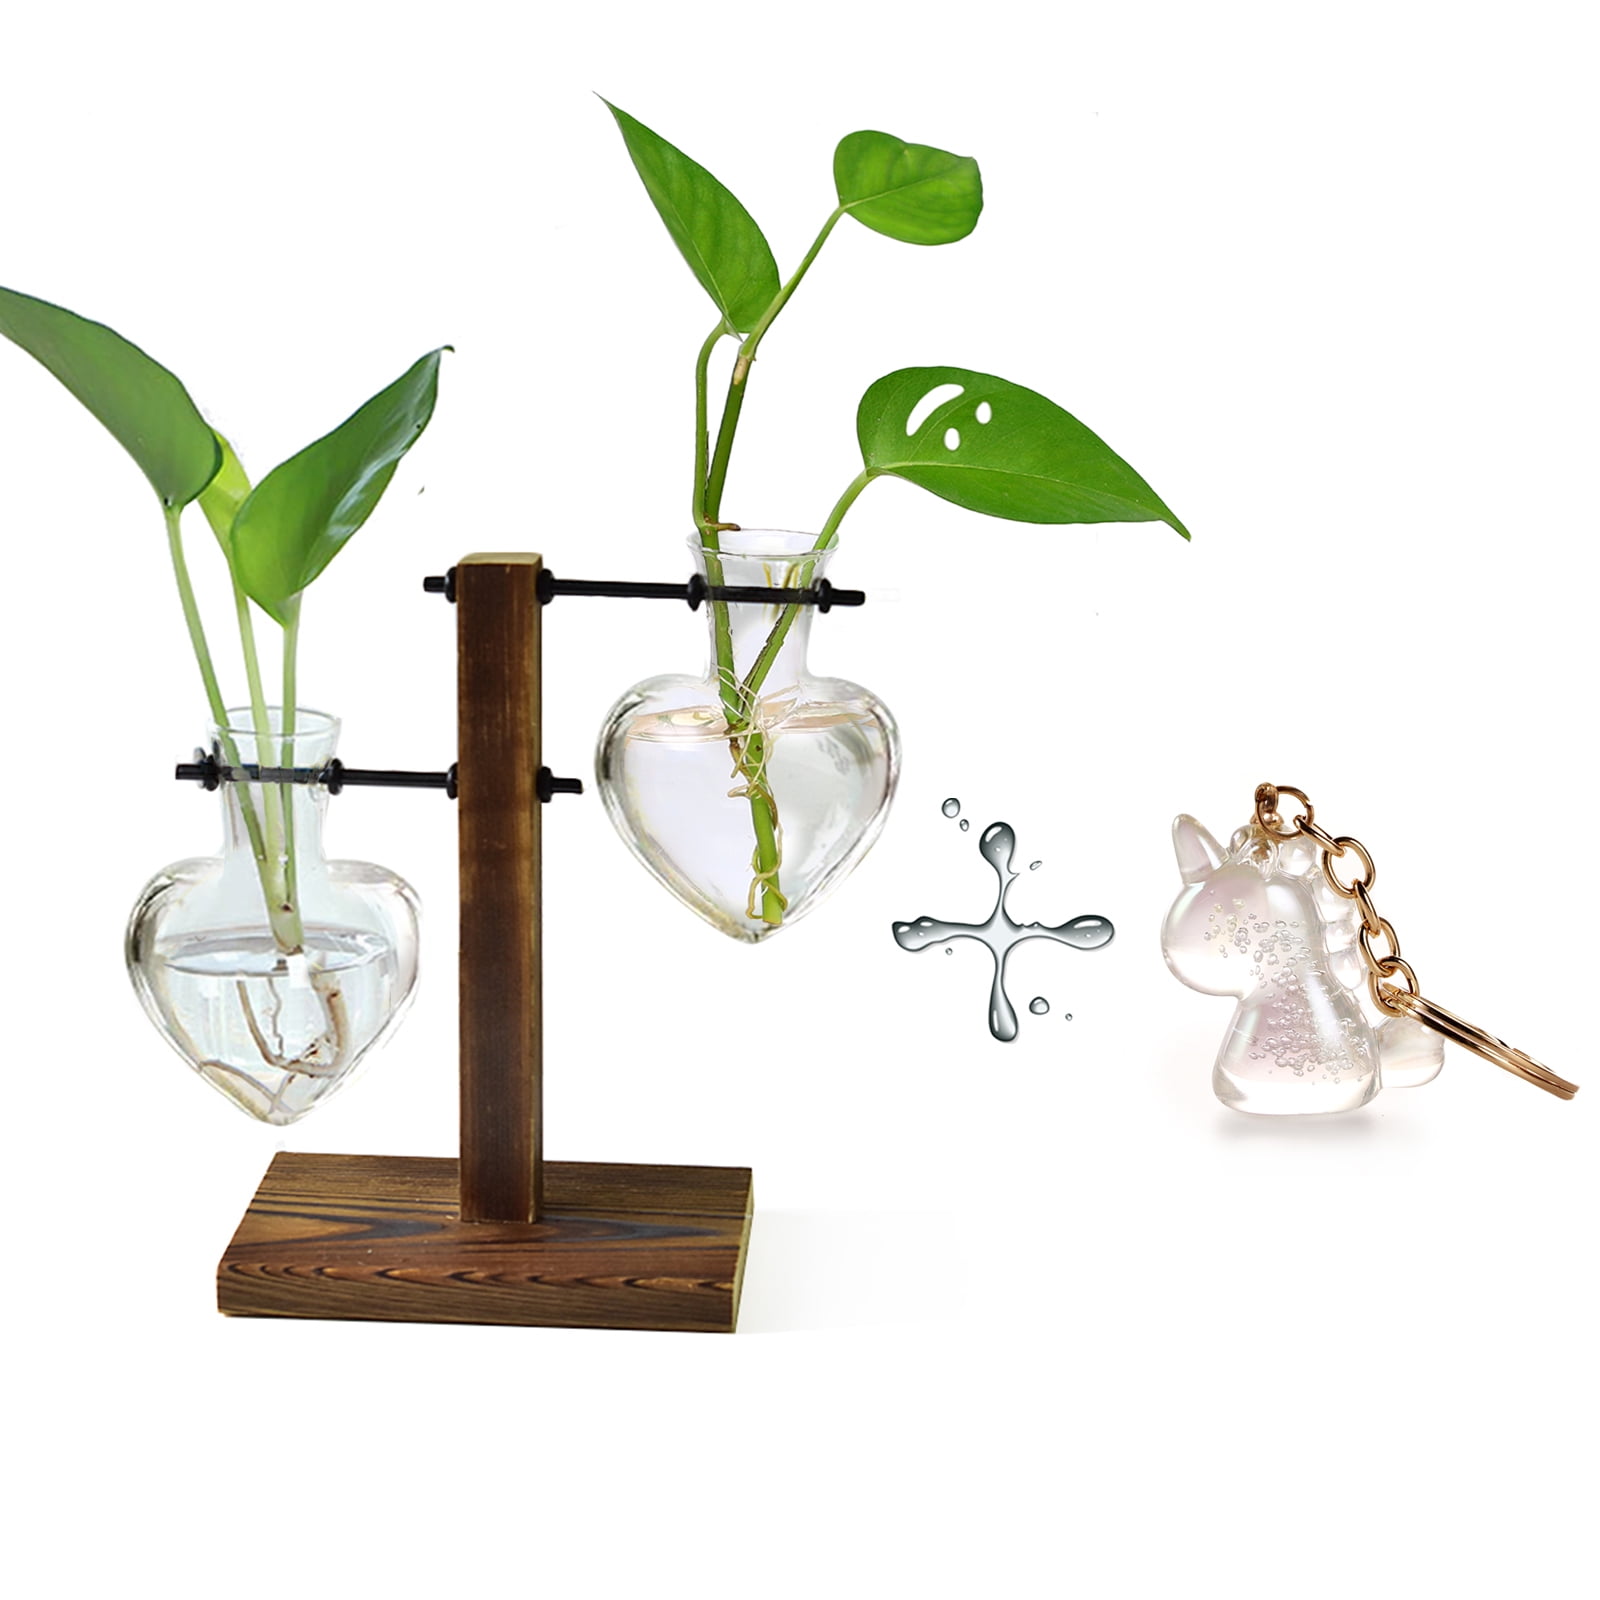  XXXFLOWER Plant Terrarium with Wooden Stand, Air Planter Bulb  Glass Vase Metal Swivel Holder Retro Tabletop for Hydroponics Home Garden  Office Decoration - 3 Bulb Vase : Patio, Lawn & Garden